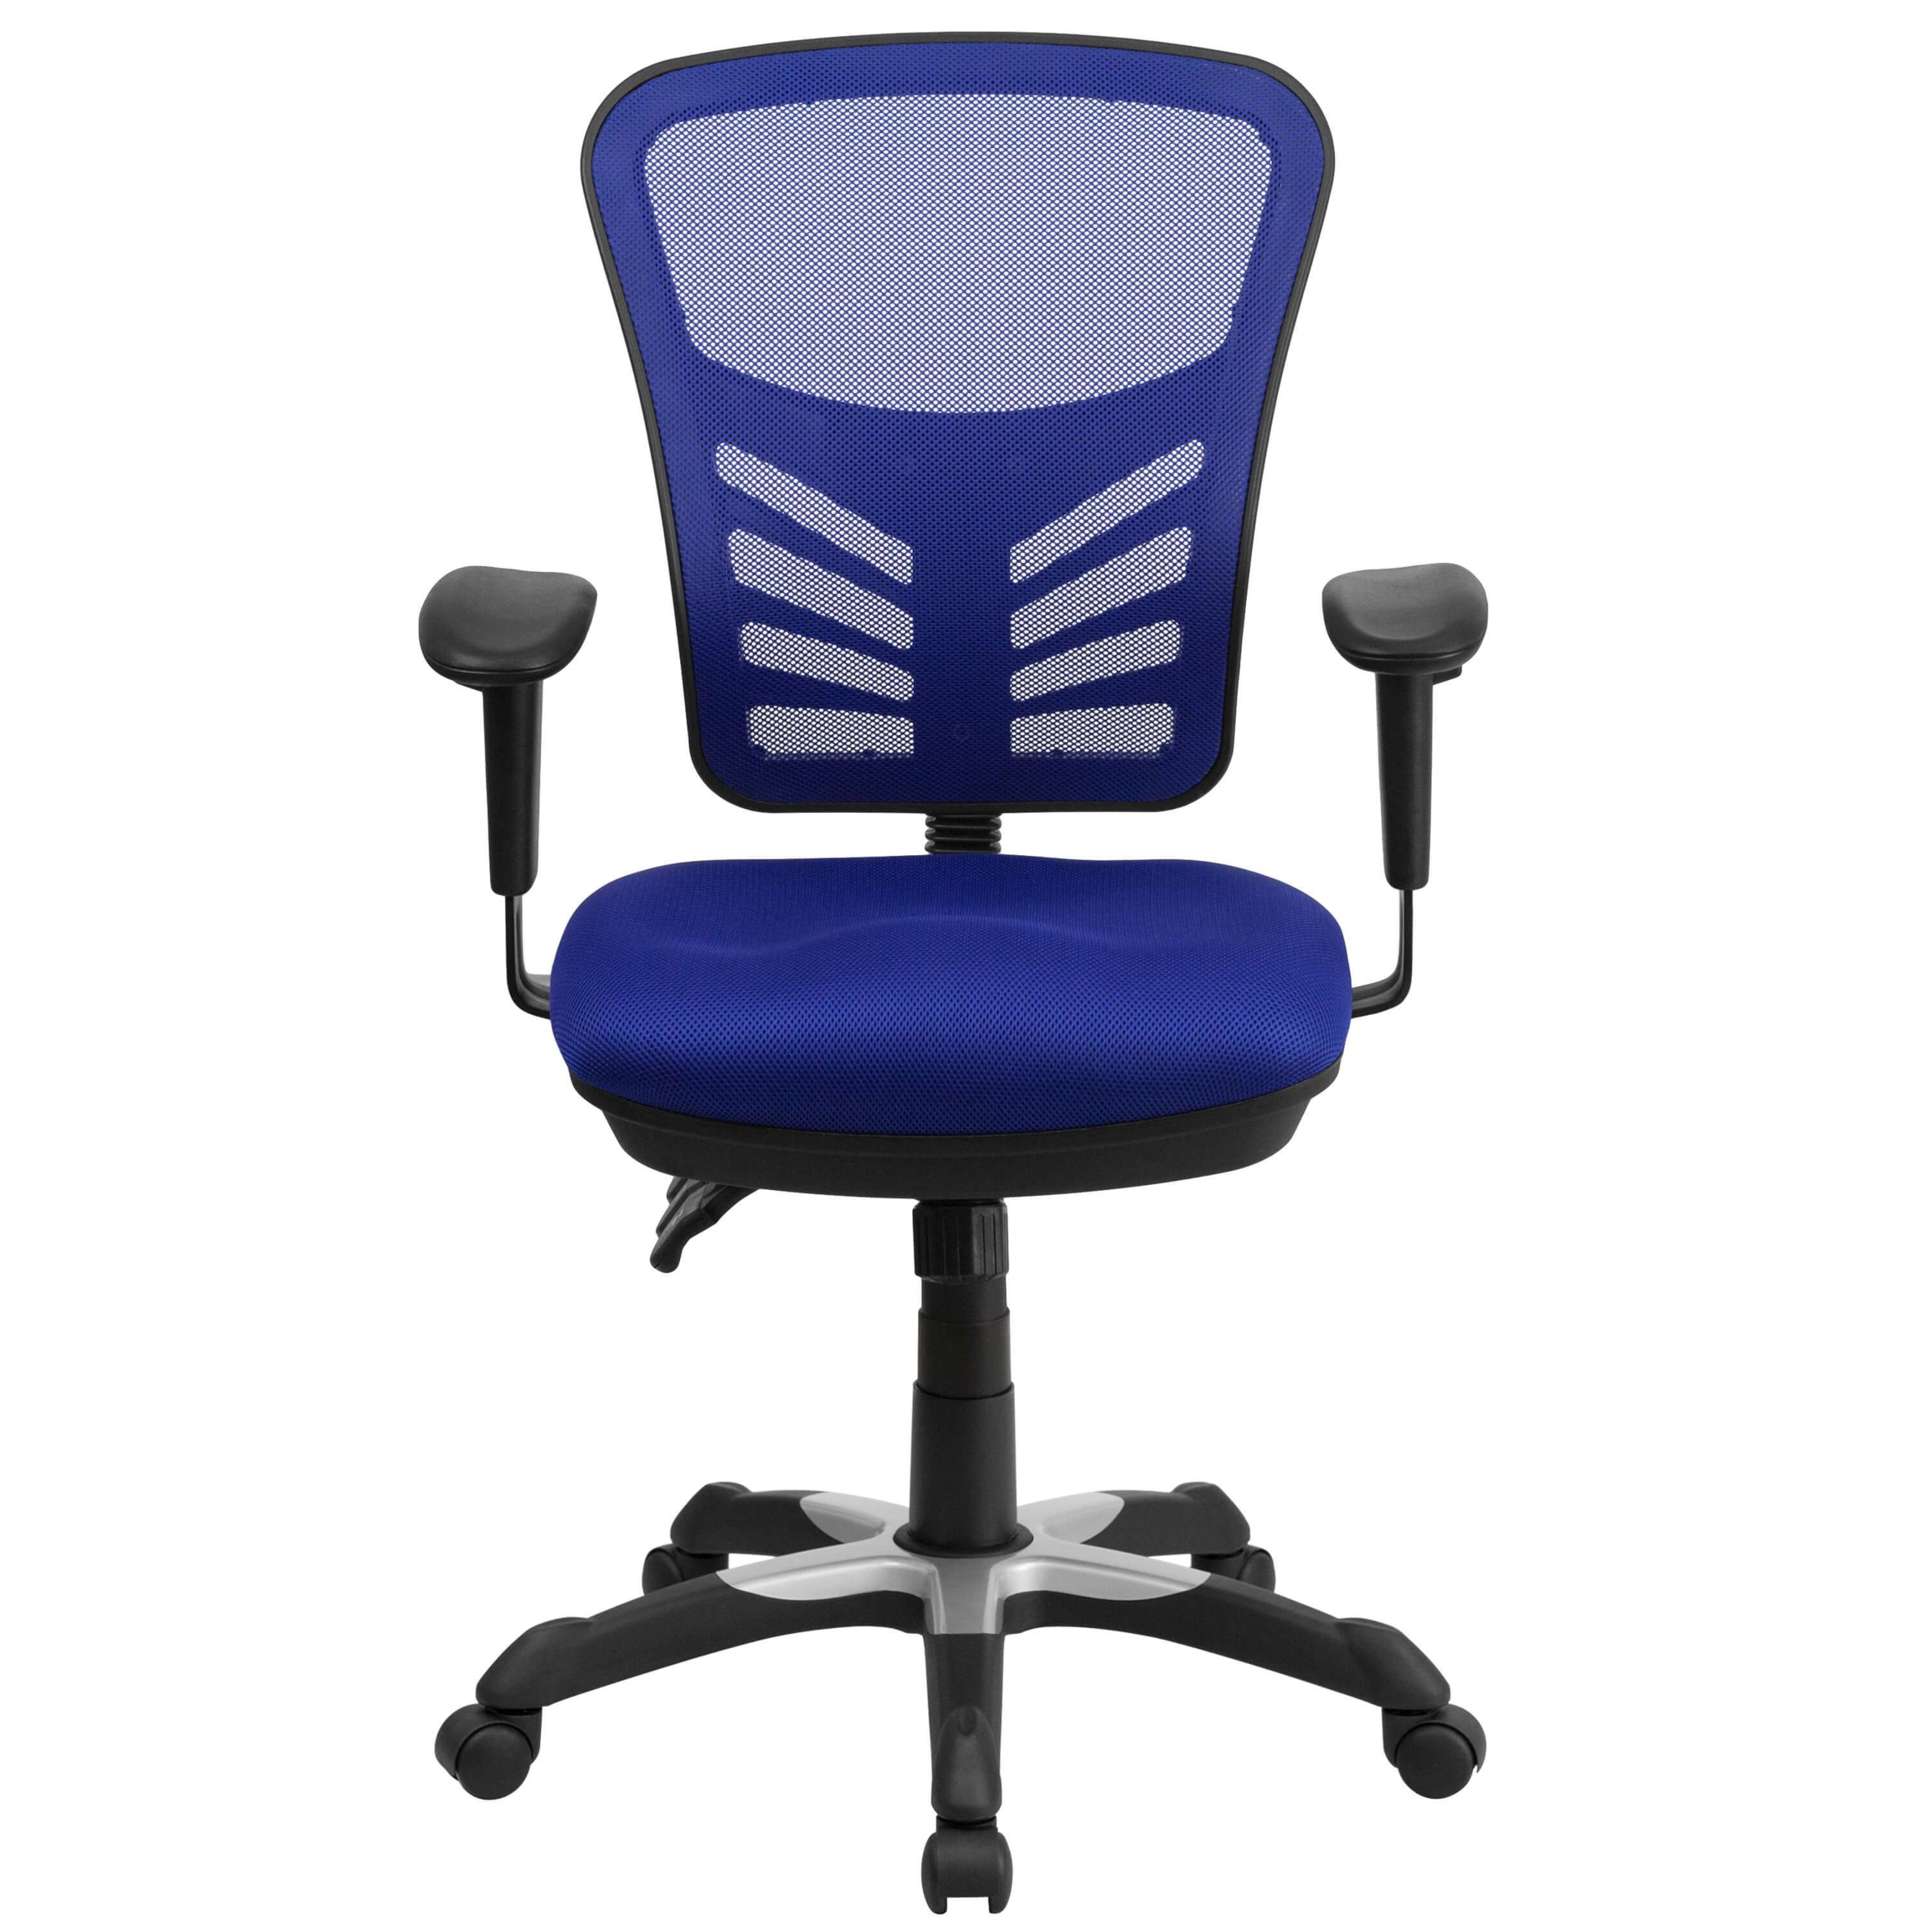  Devoko Office Desk Chair Ergonomic Mesh Chair Lumbar